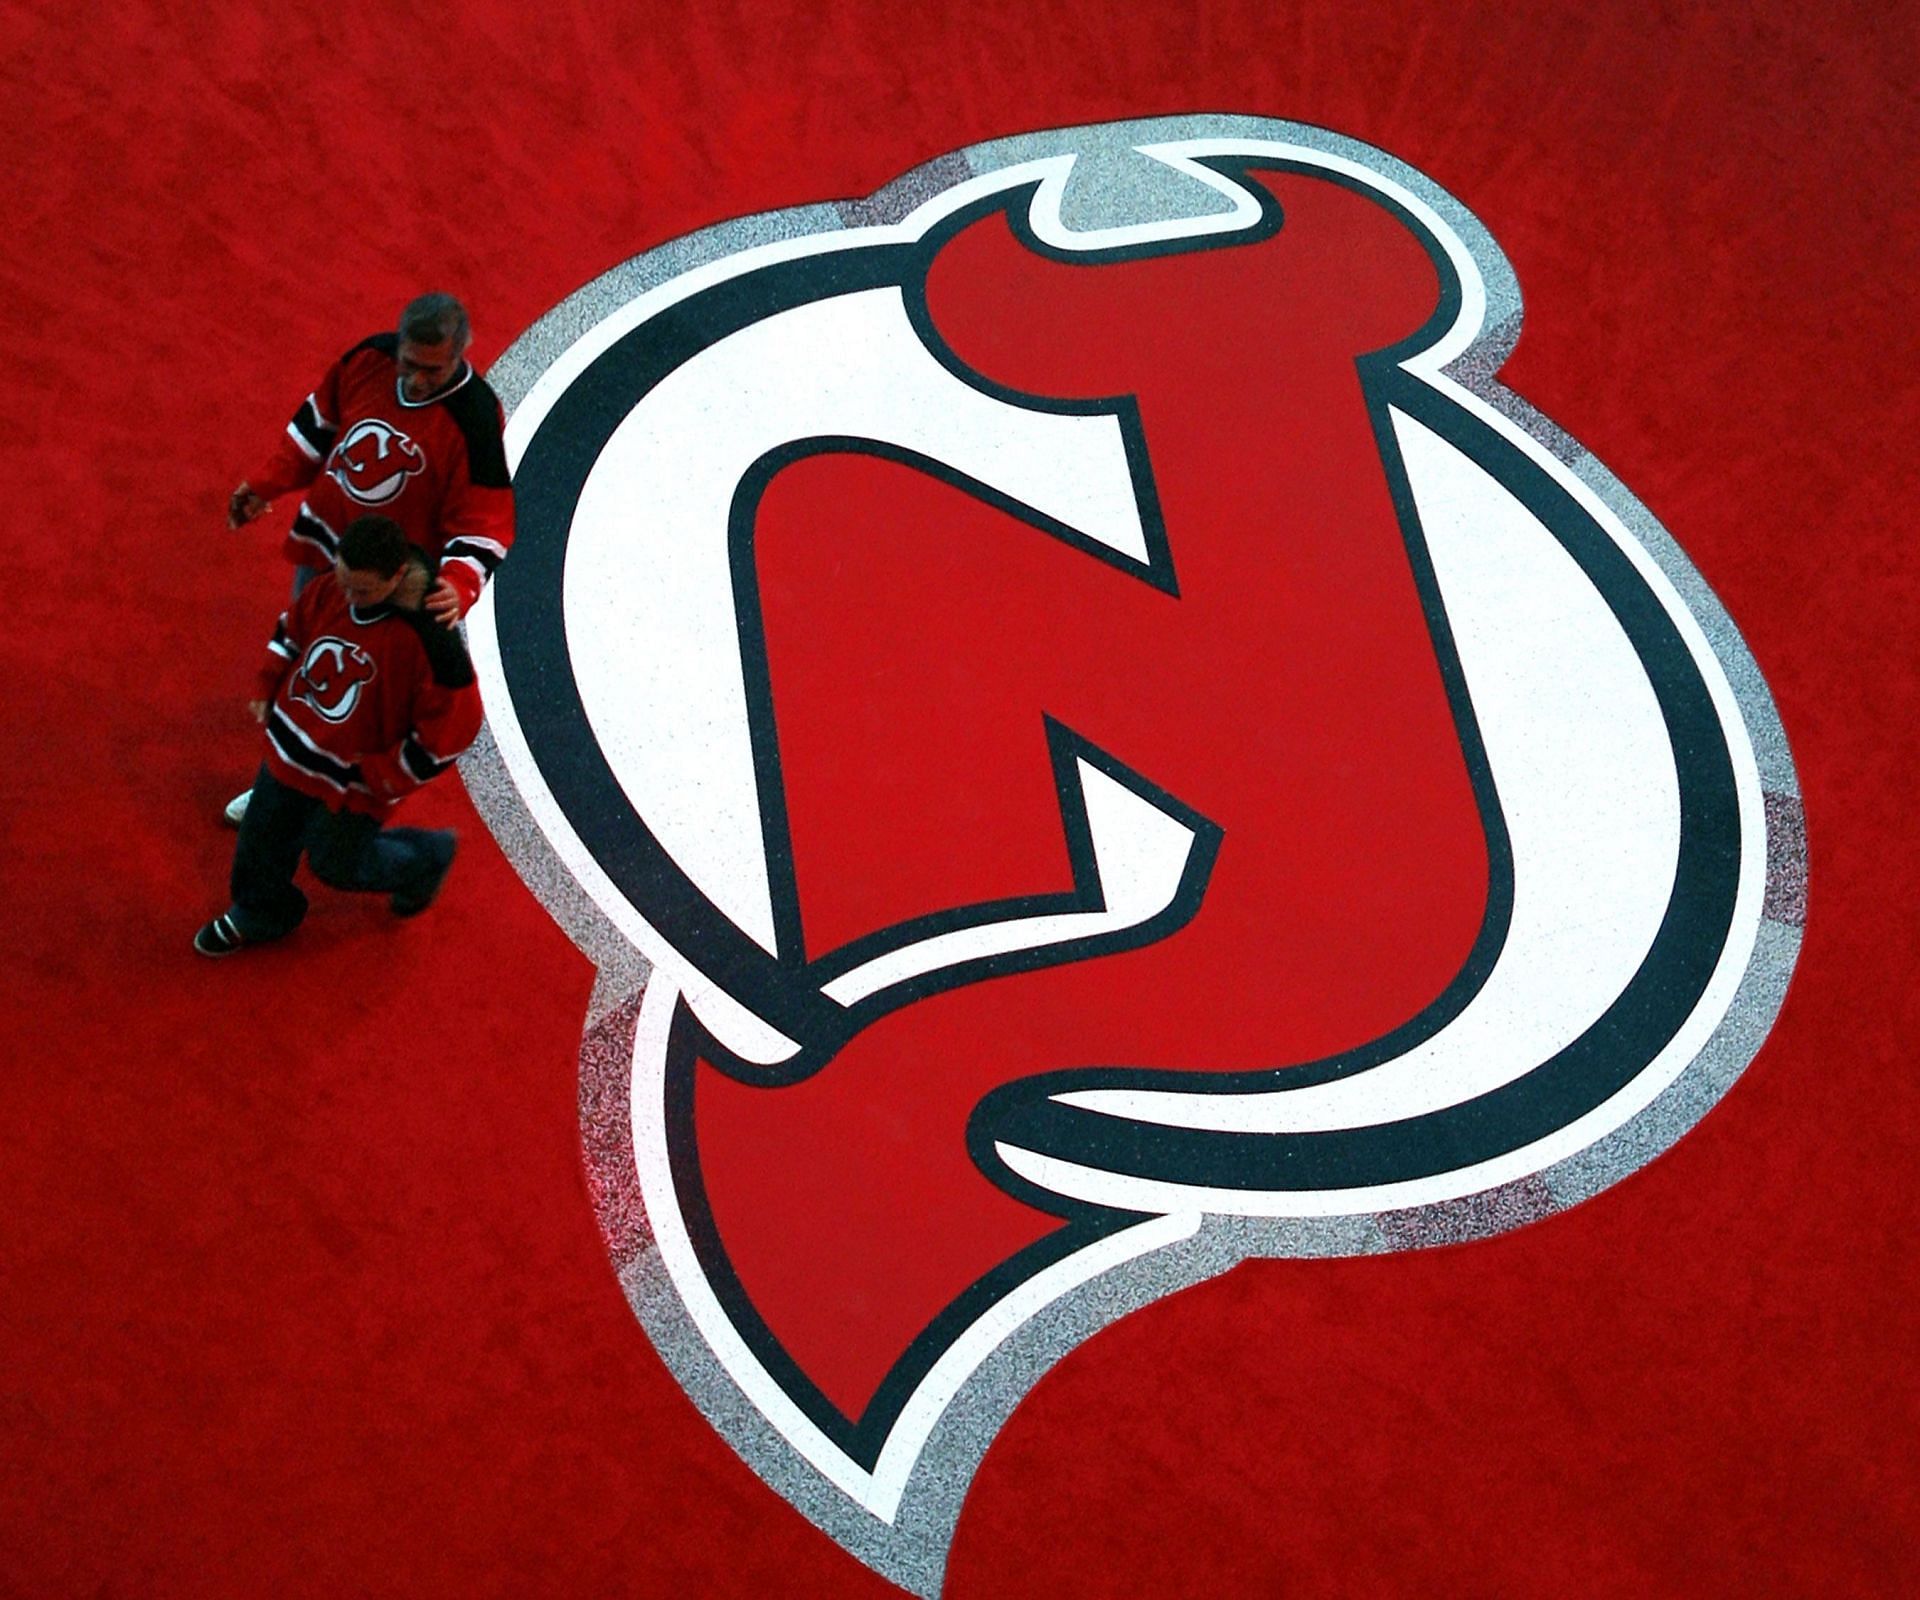 New jersey devils. Хоккейный клуб Нью-джерси Девилз. Нью джерси НХЛ логотип. Джерси Дэвилз. New Jersey Devils джерси.